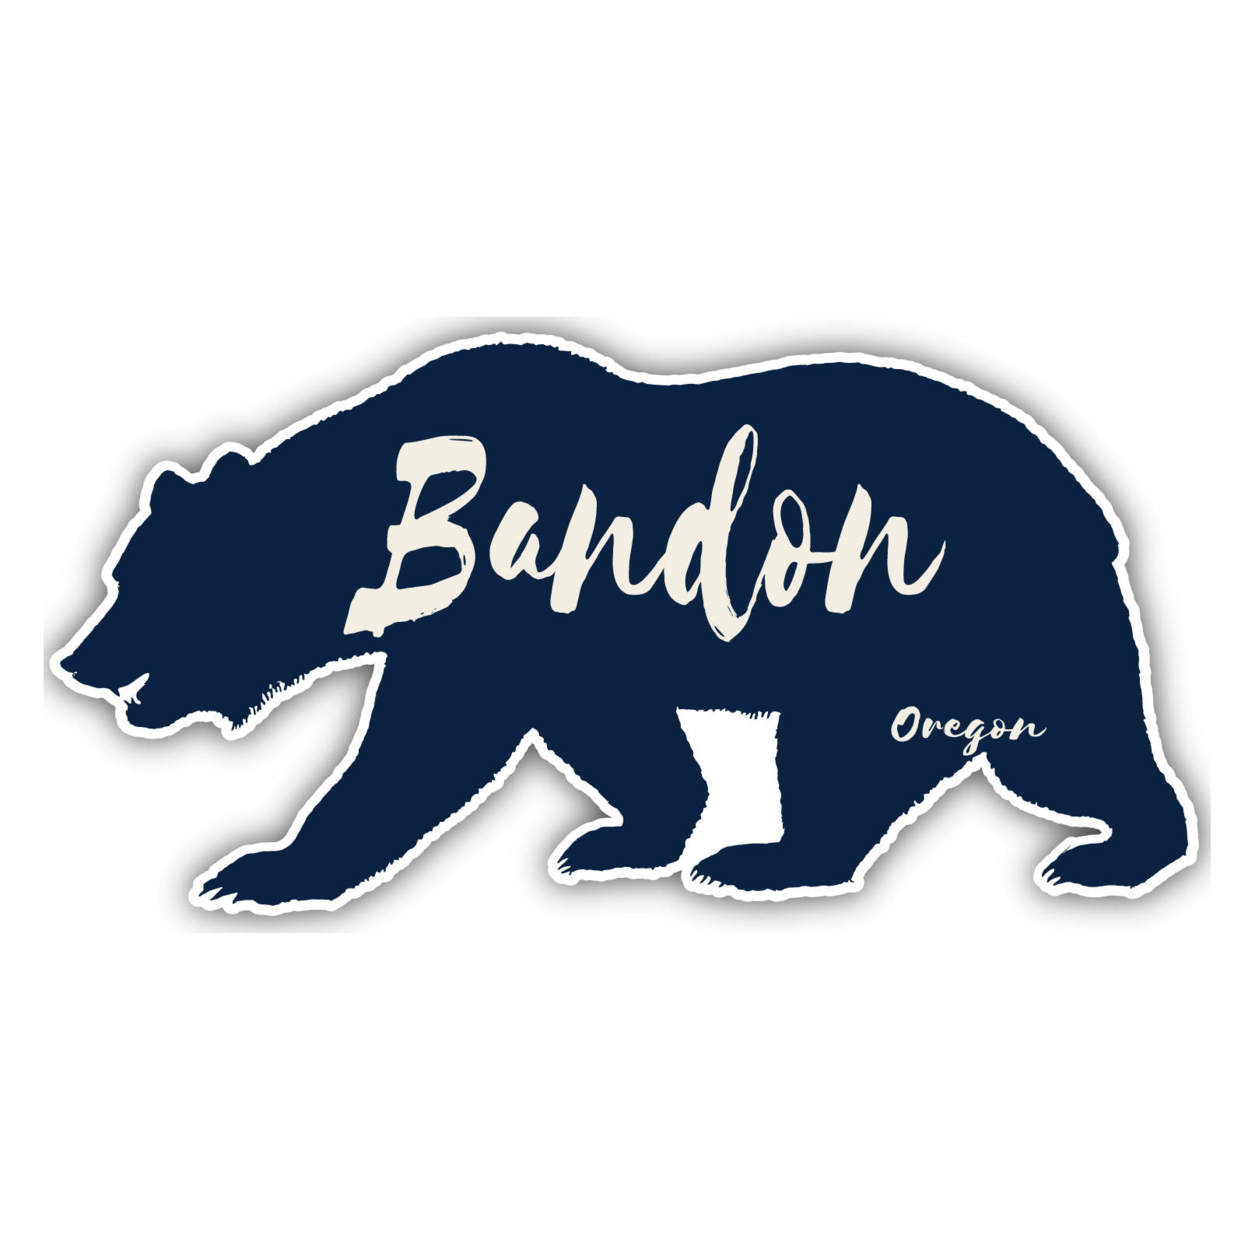 Bandon Oregon Souvenir Decorative Stickers (Choose Theme And Size) - 4-Pack, 4-Inch, Camp Life